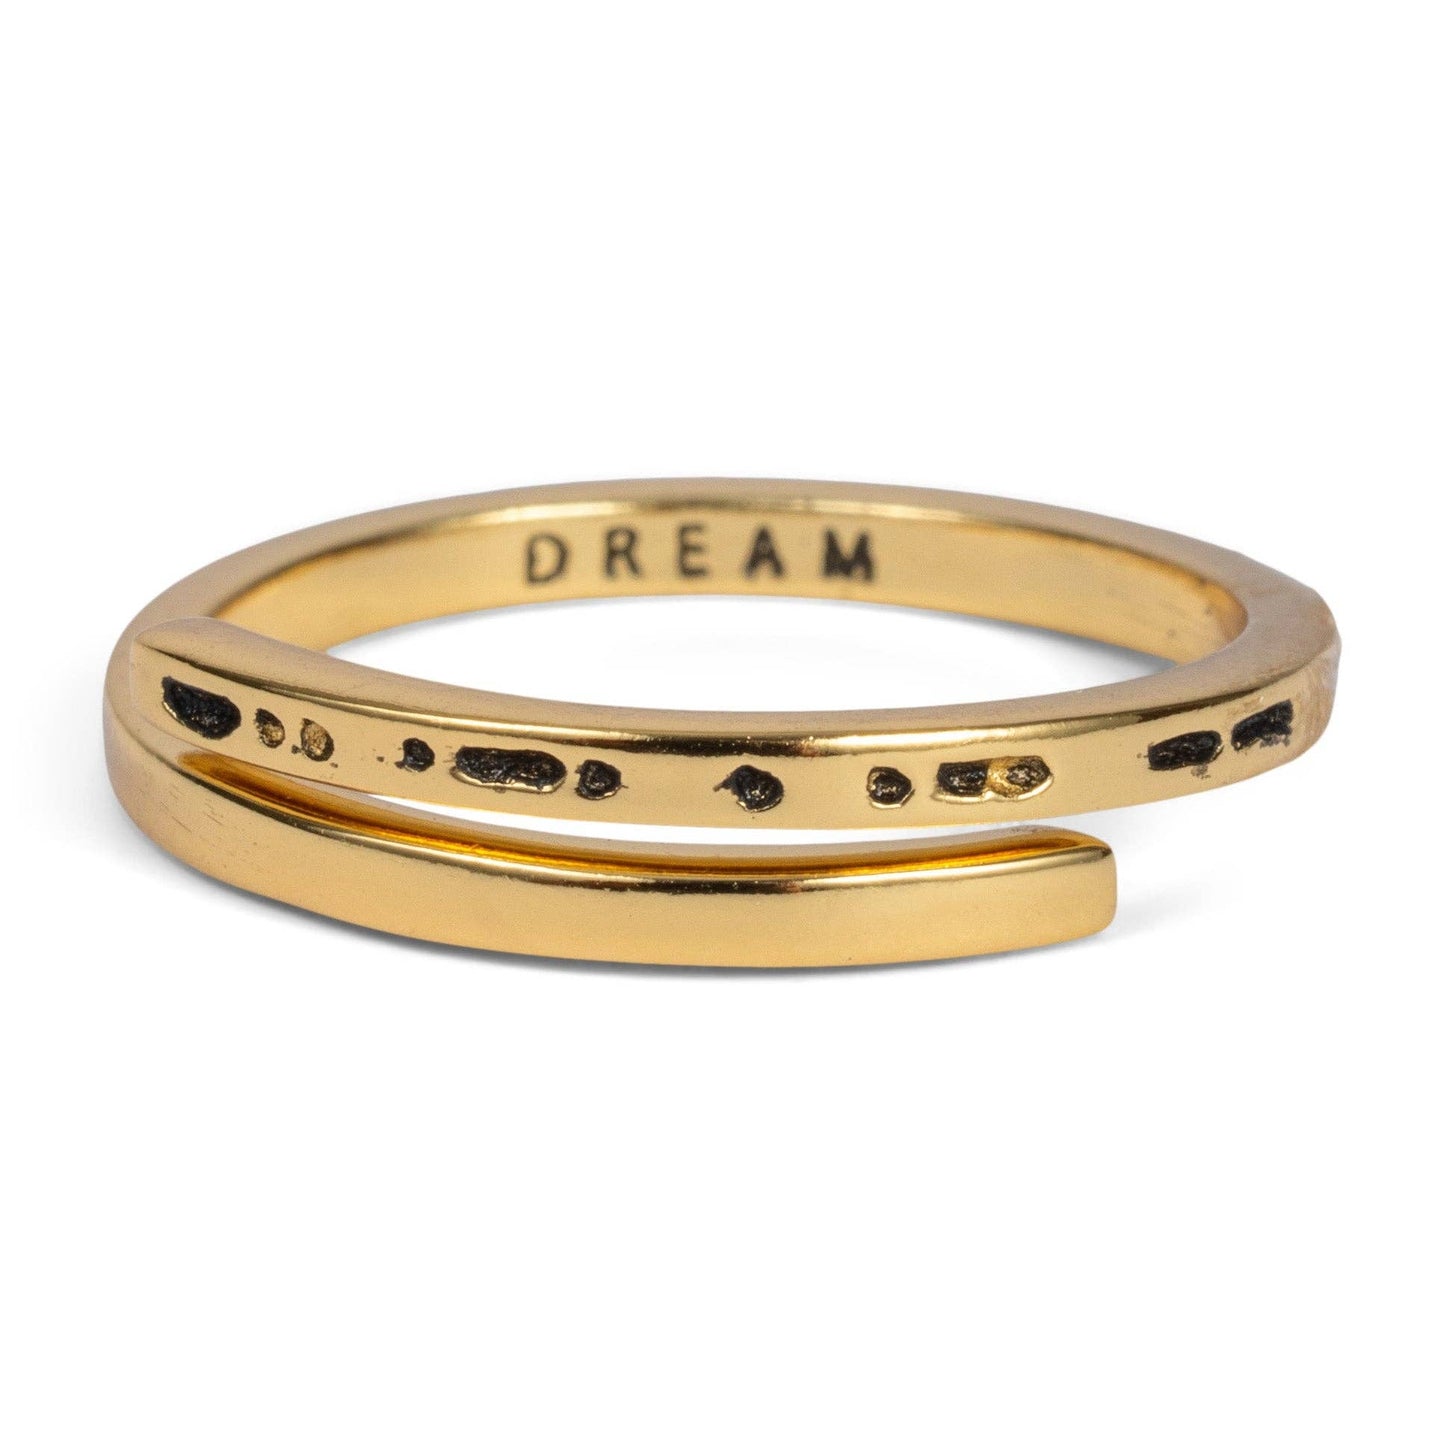 CLASSIC GOLD Morse Code Ring - Stamped | DREAM: Dream